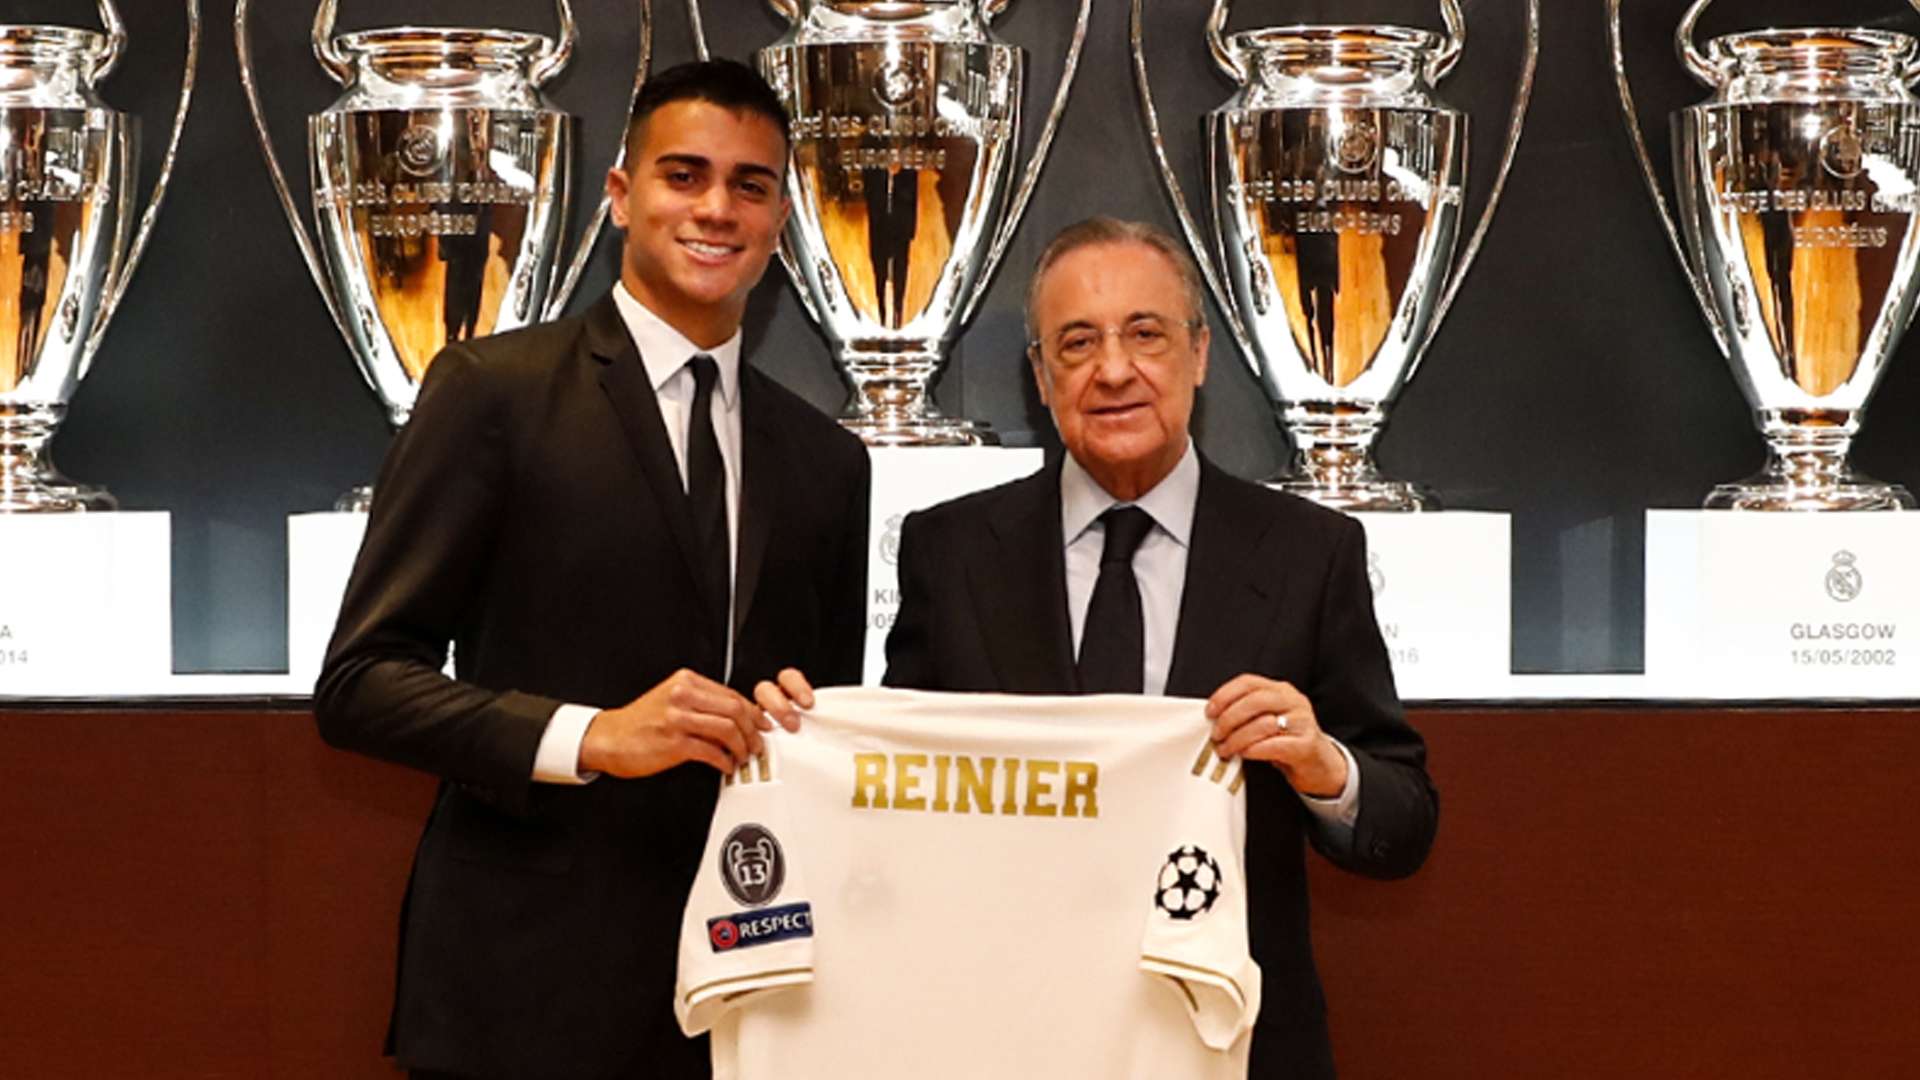 Reinier y Florentino Pérez, Real Madrid